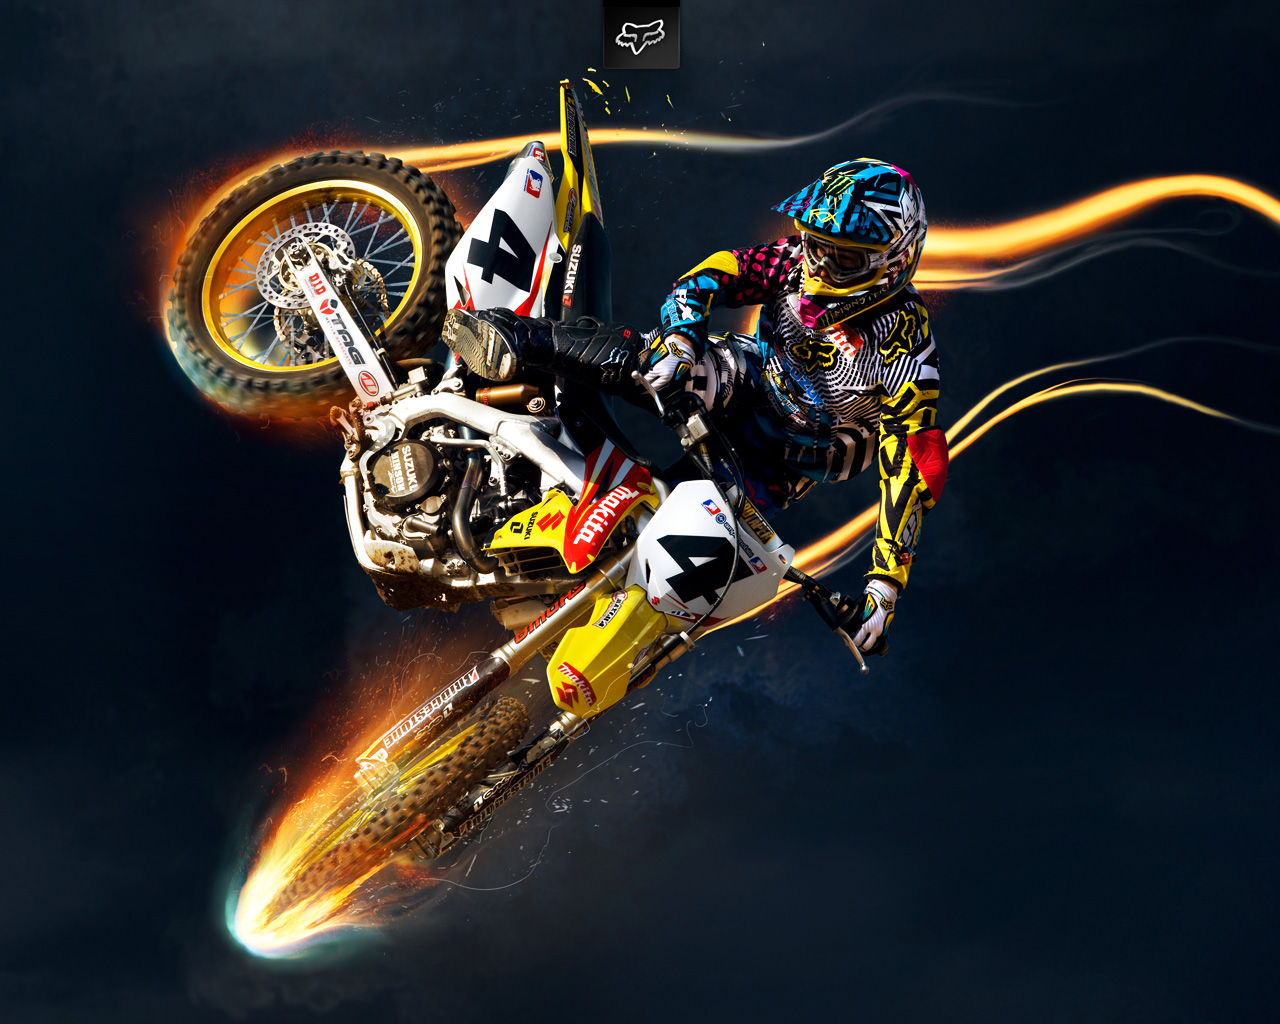 download the last version for apple Sunset Bike Racing - Motocross